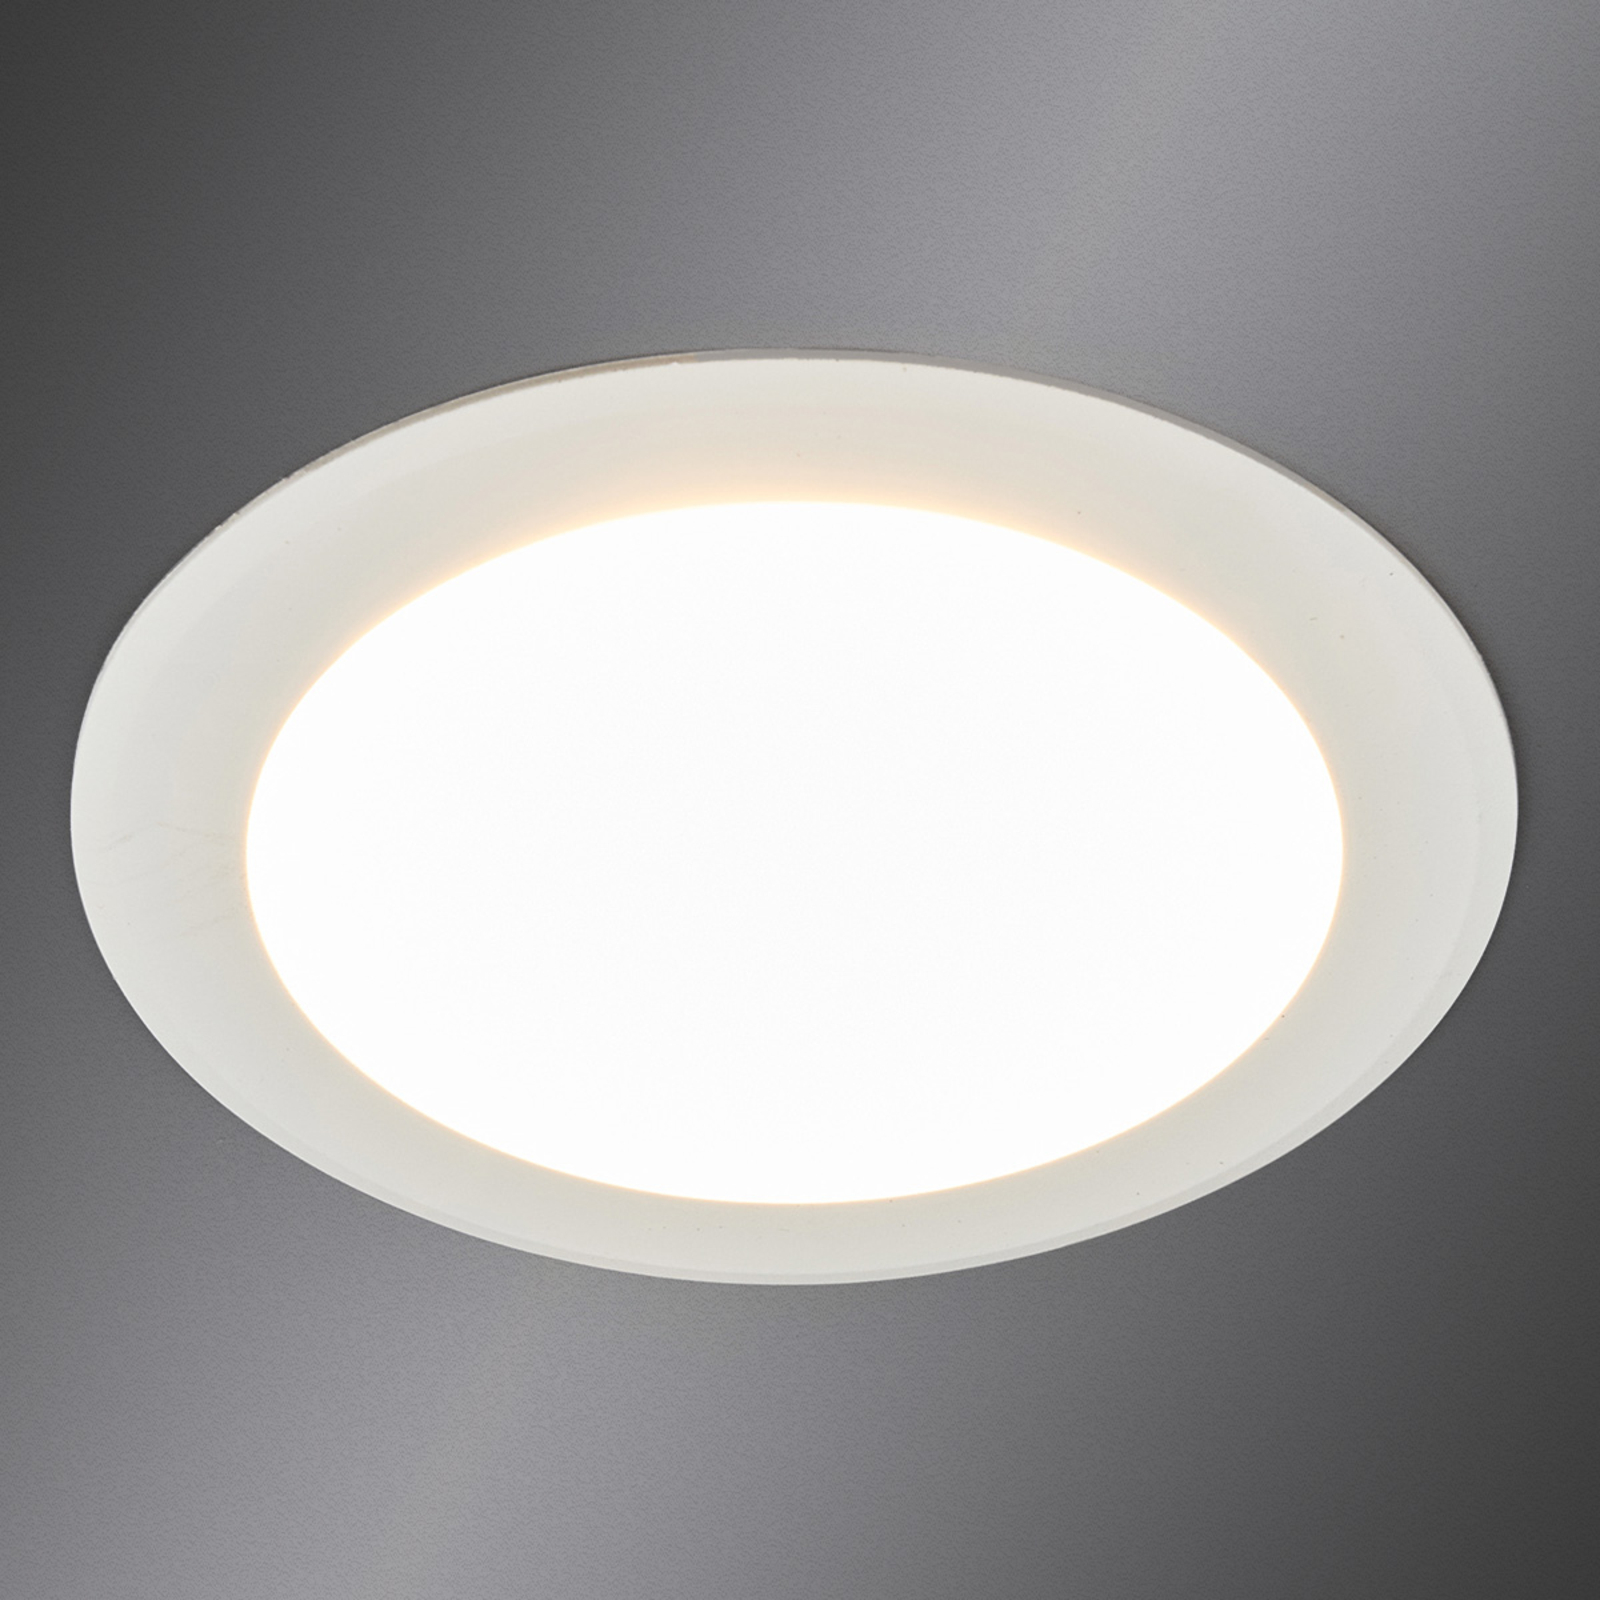 Kaliber Definitie slecht Arian - LED inbouwspot in wit, 11,3 cm 9W | Lampen24.nl